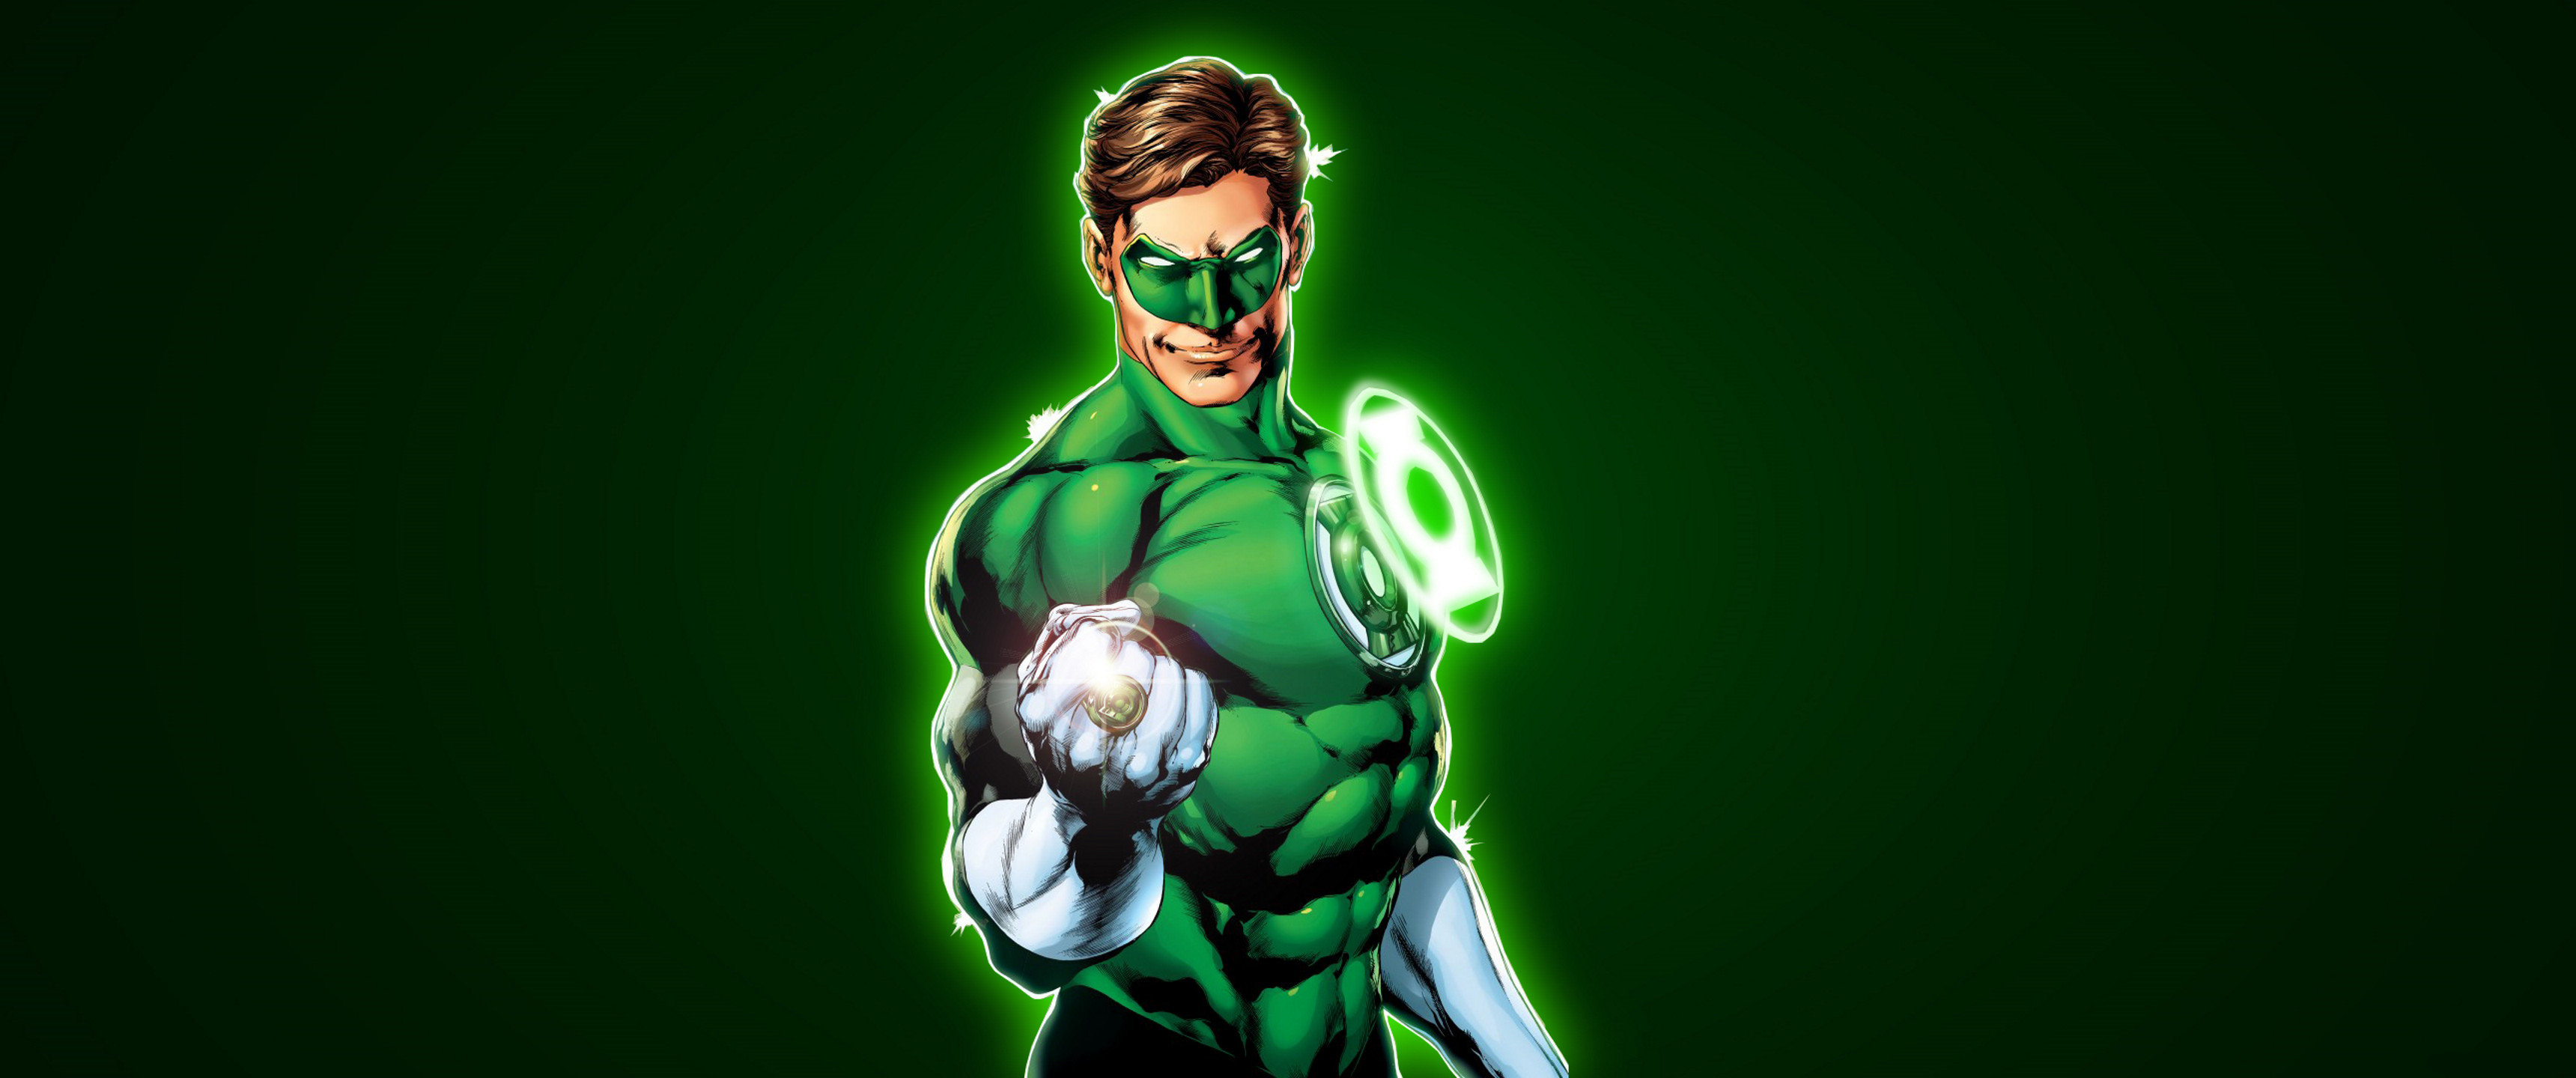 High resolution Green Lantern Corps hd 3440x1440 wallpaper ID:277415 for PC